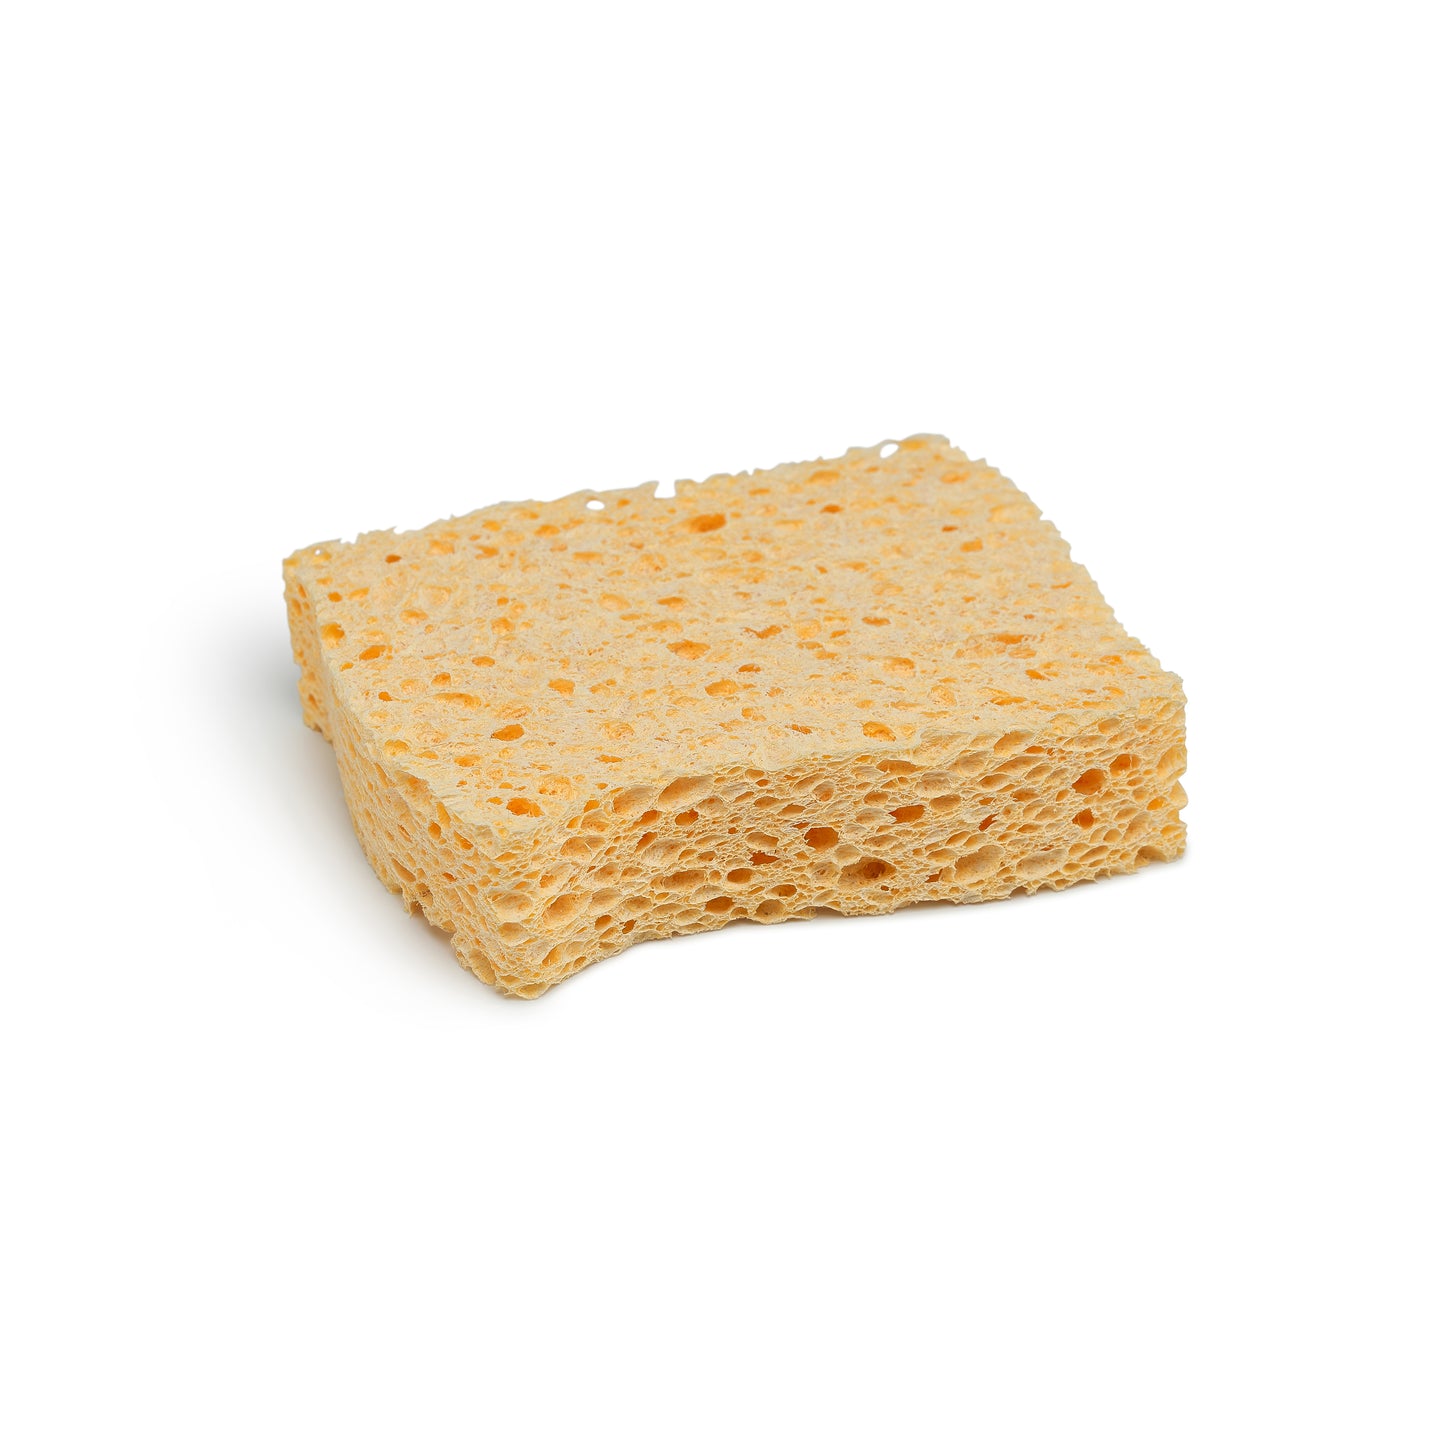 Compostable Sponges (2 pack)